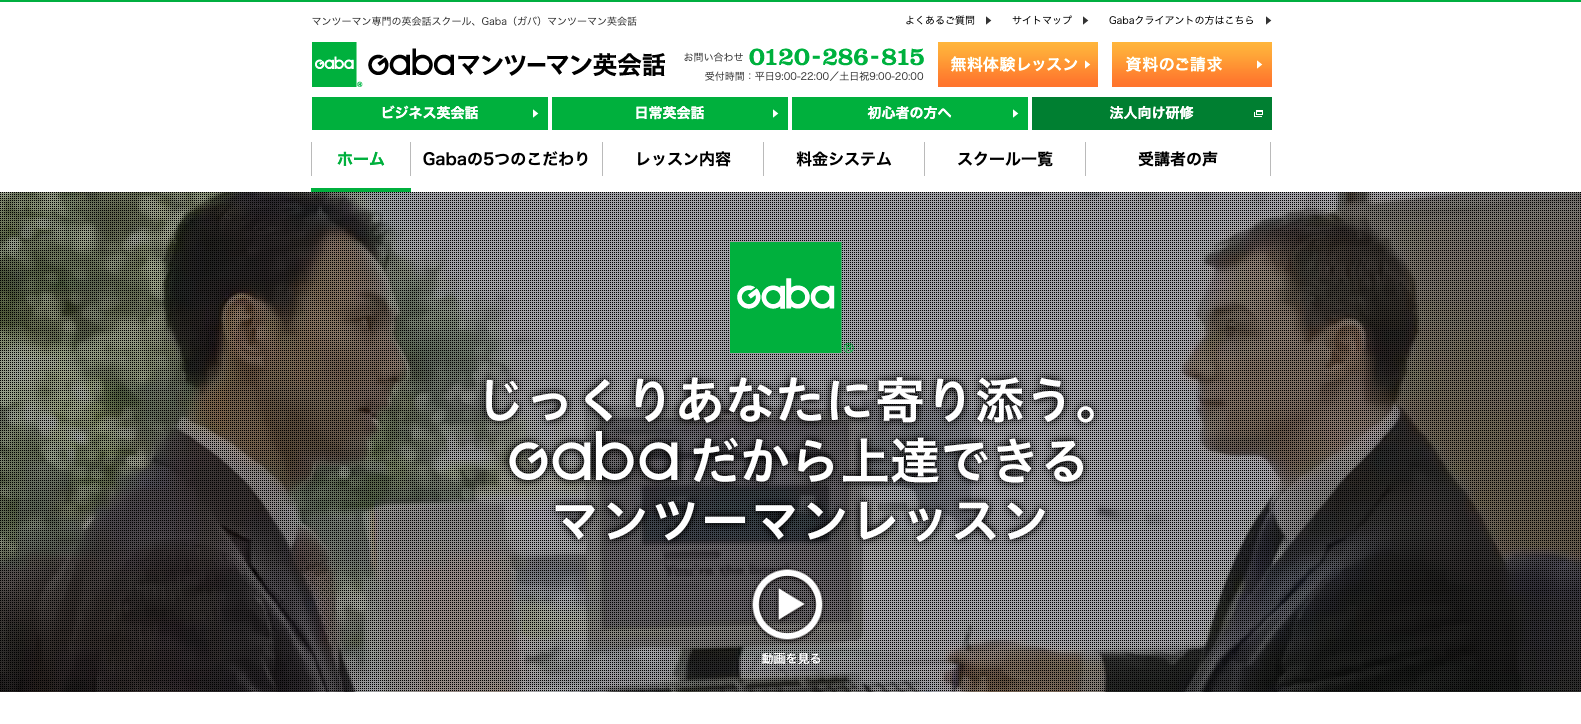 Gabaのウェブサイト